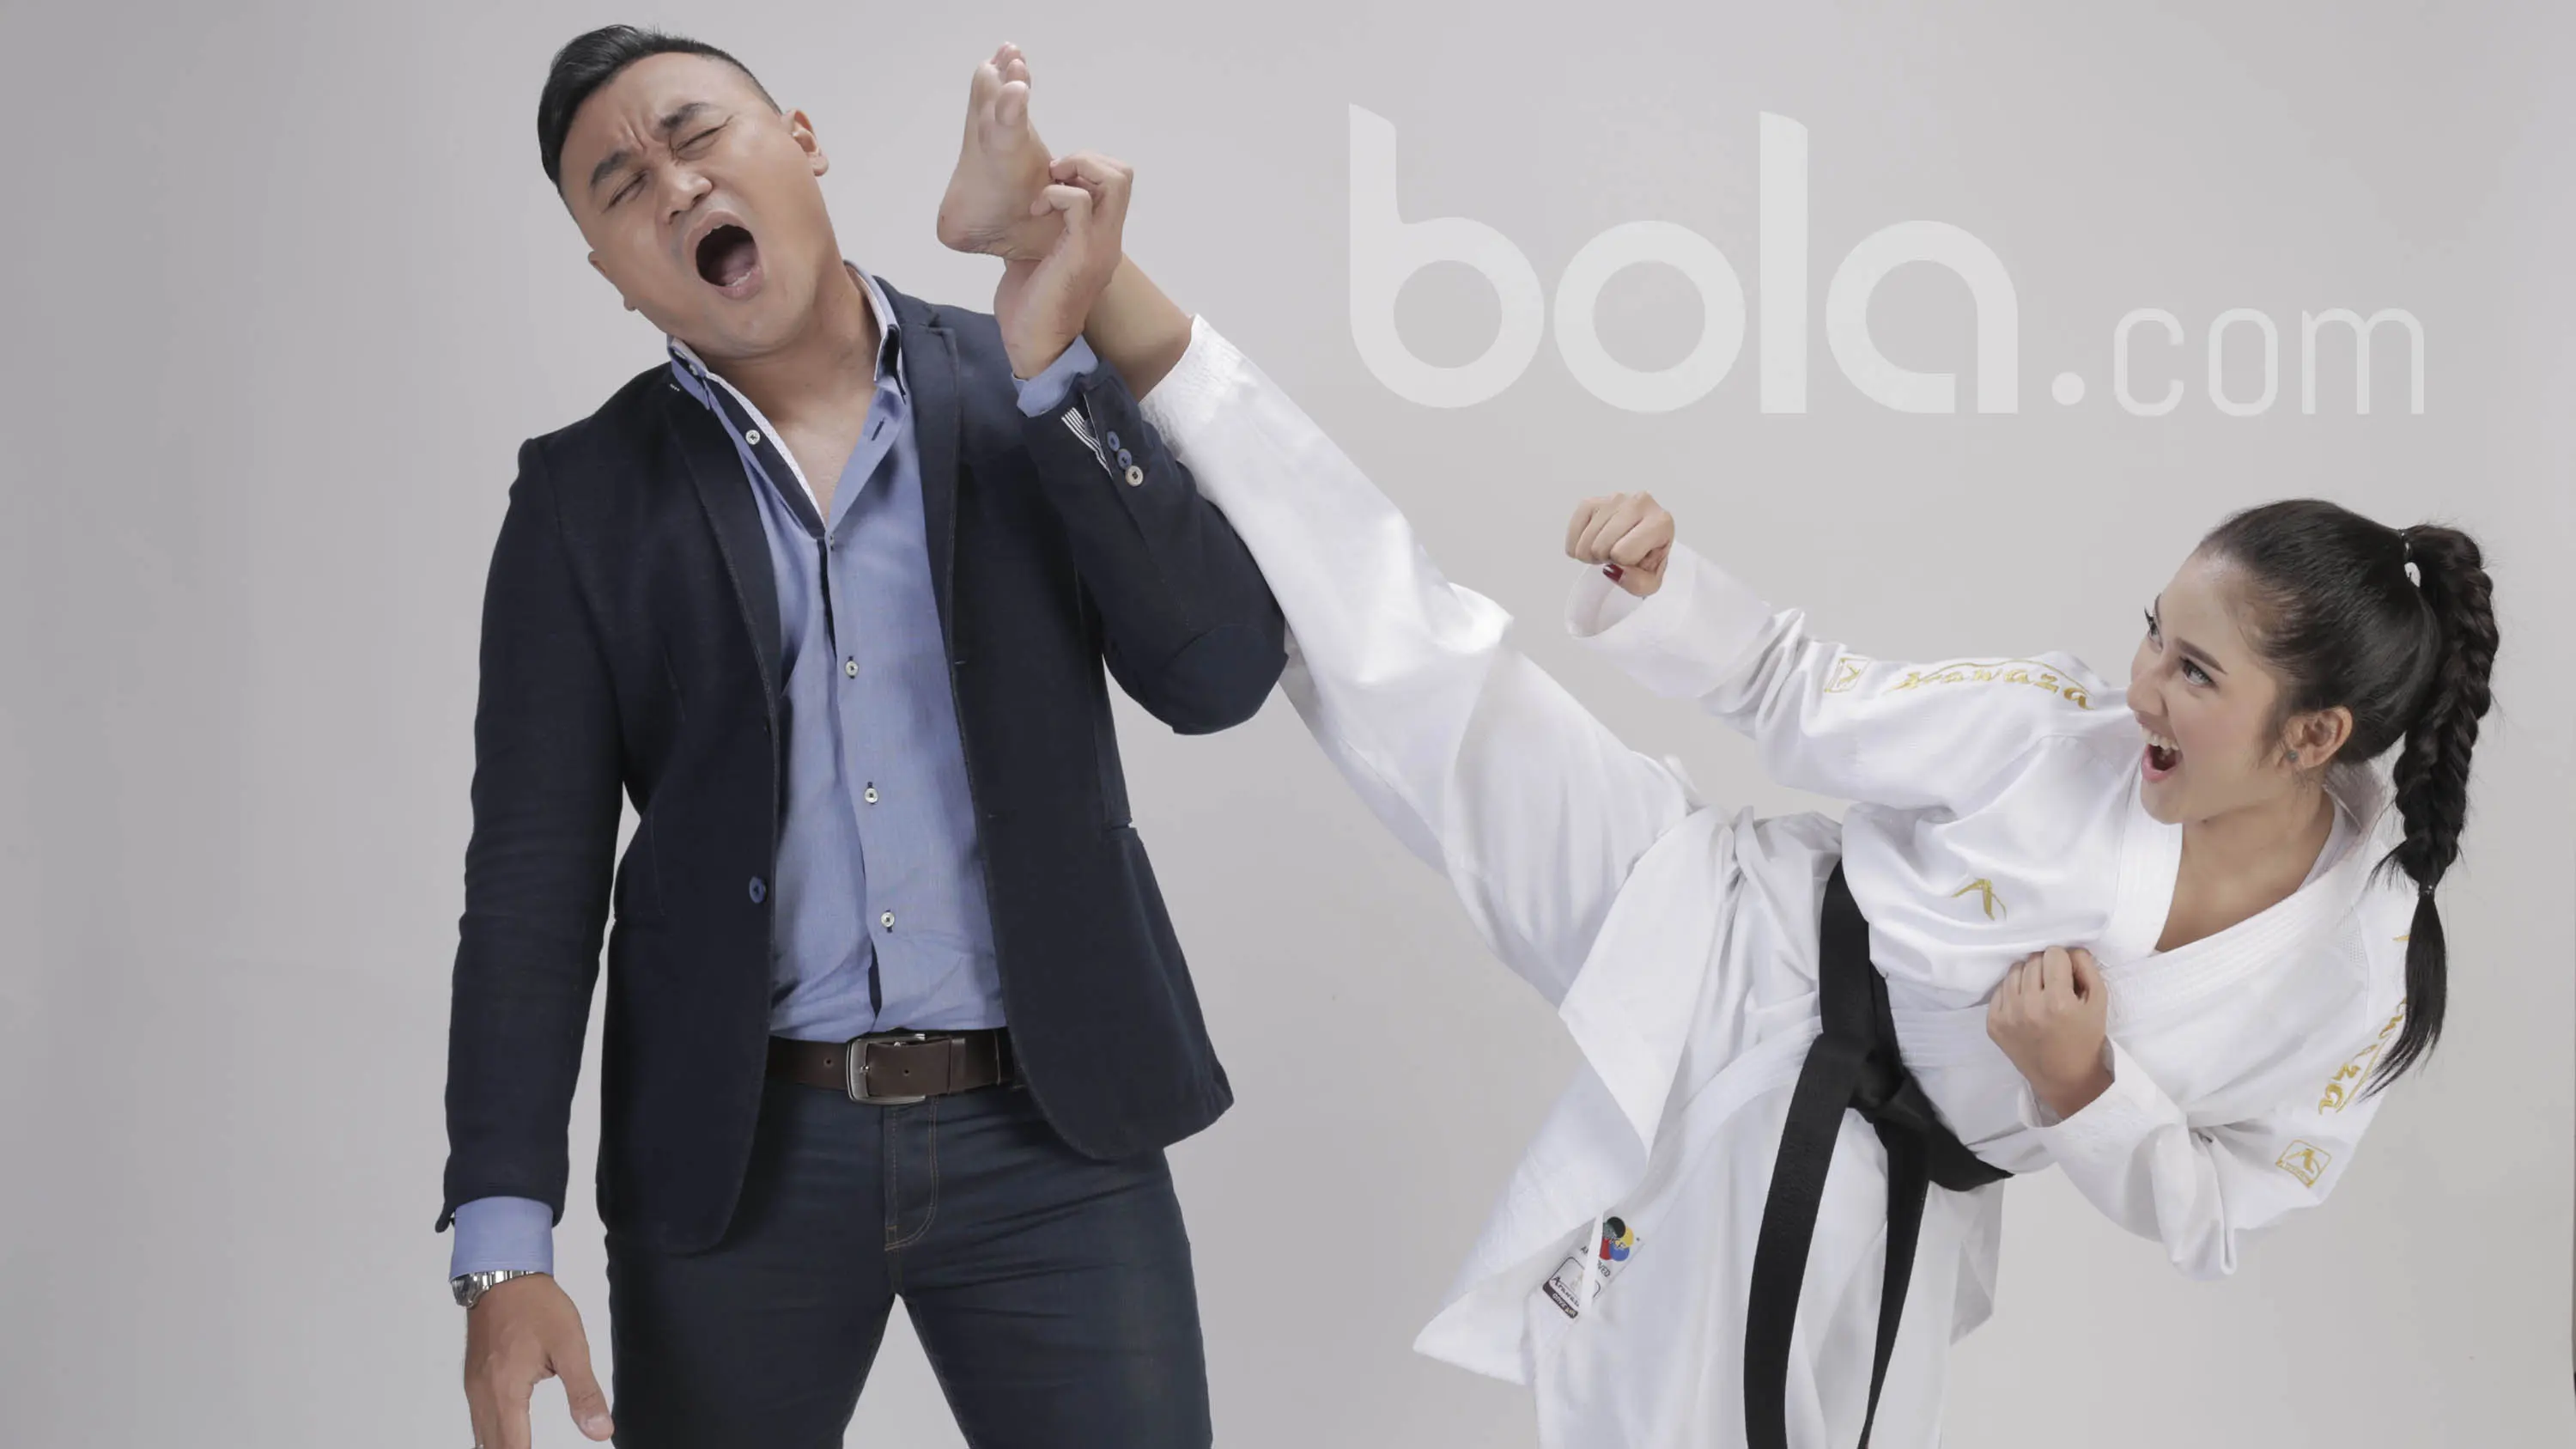 Karateka Indonesia, Claresta Taufan, bersama presenter olahraga, Rendra Soedjono, saat menjalani sesi foto di Studio Boloa.com, Jakarta, Minggu (26/3/2017). (Bola.com/Peksi Cahyo)